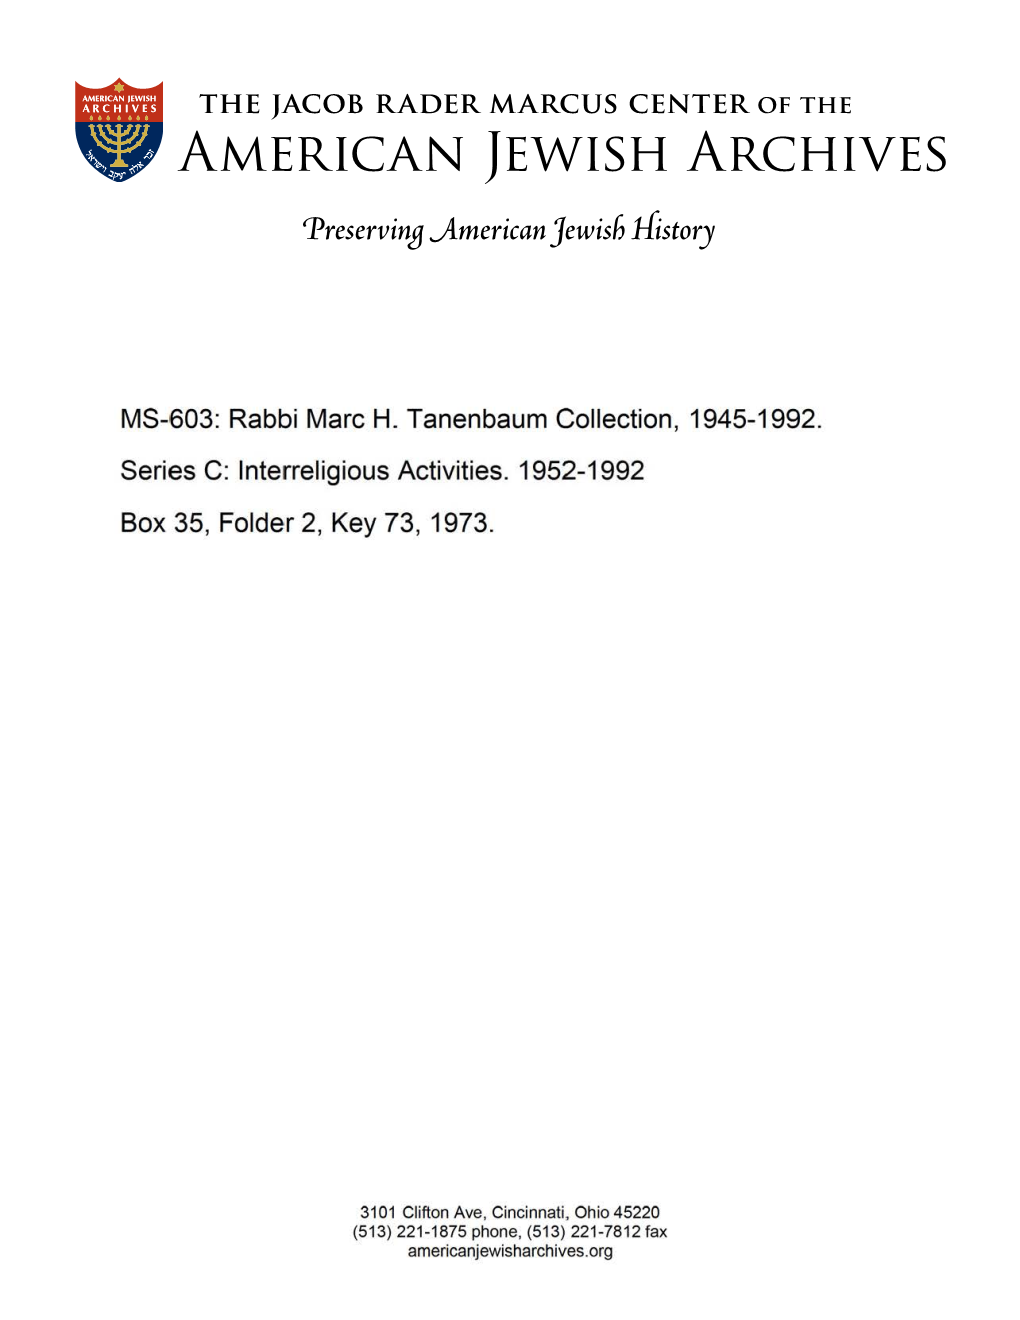 MS-603: Rabbi Marc H. Tanenbaum Collection, 1945-1992. Series C: Lnterreligious Activities. 1952-1992 Box 35, Folder 2, Key 73